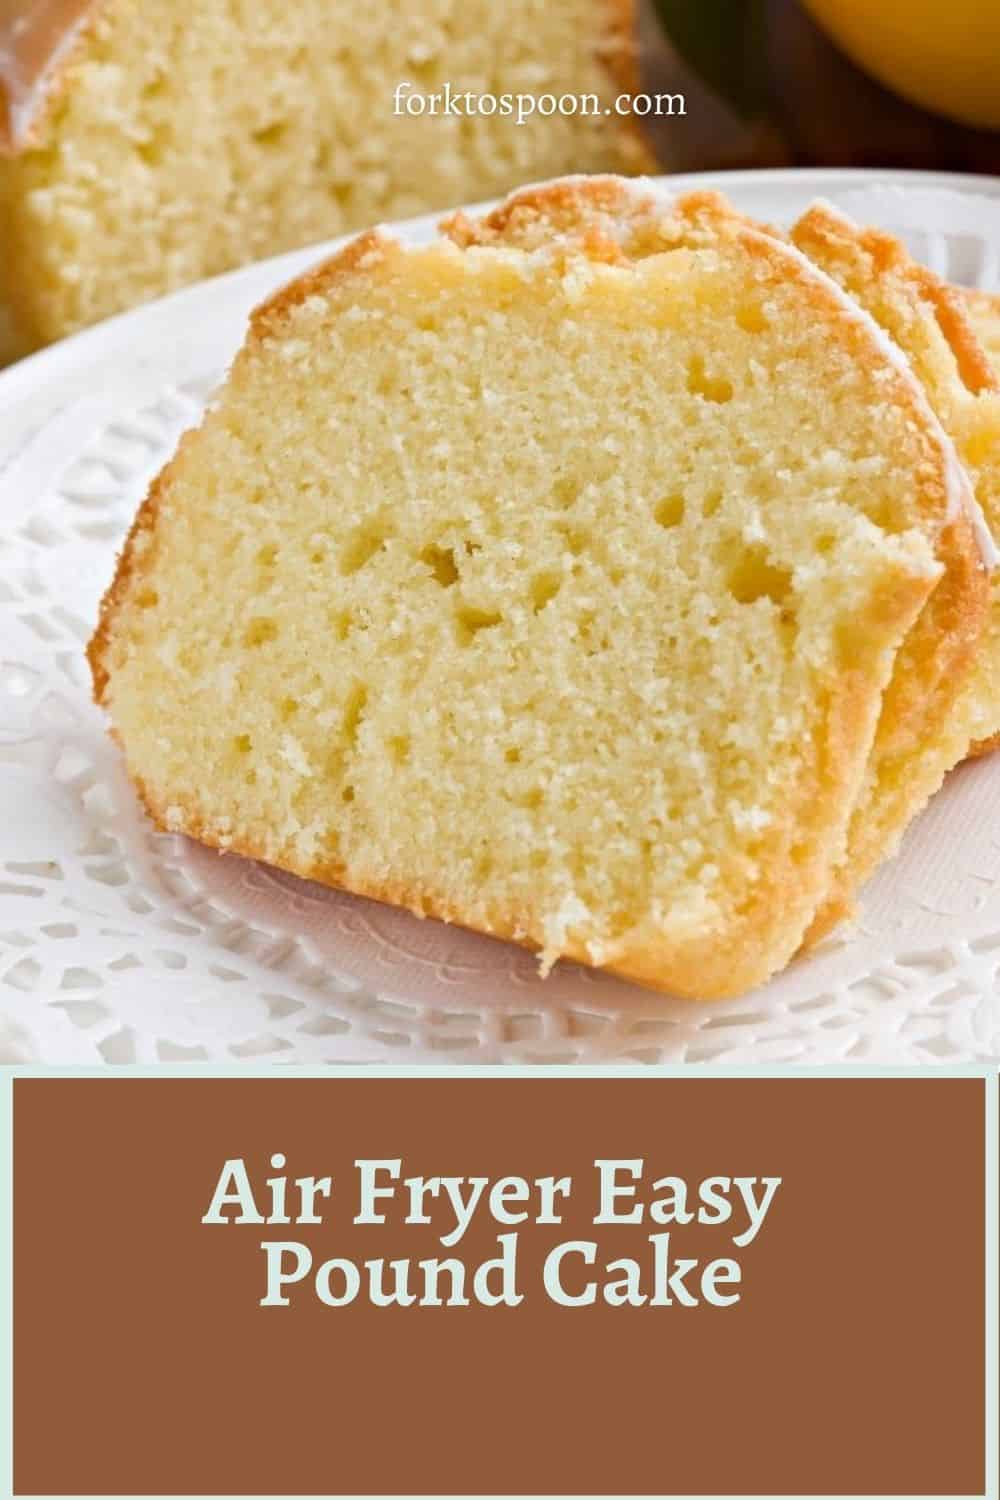 Air Fryer Easy Pound Cake